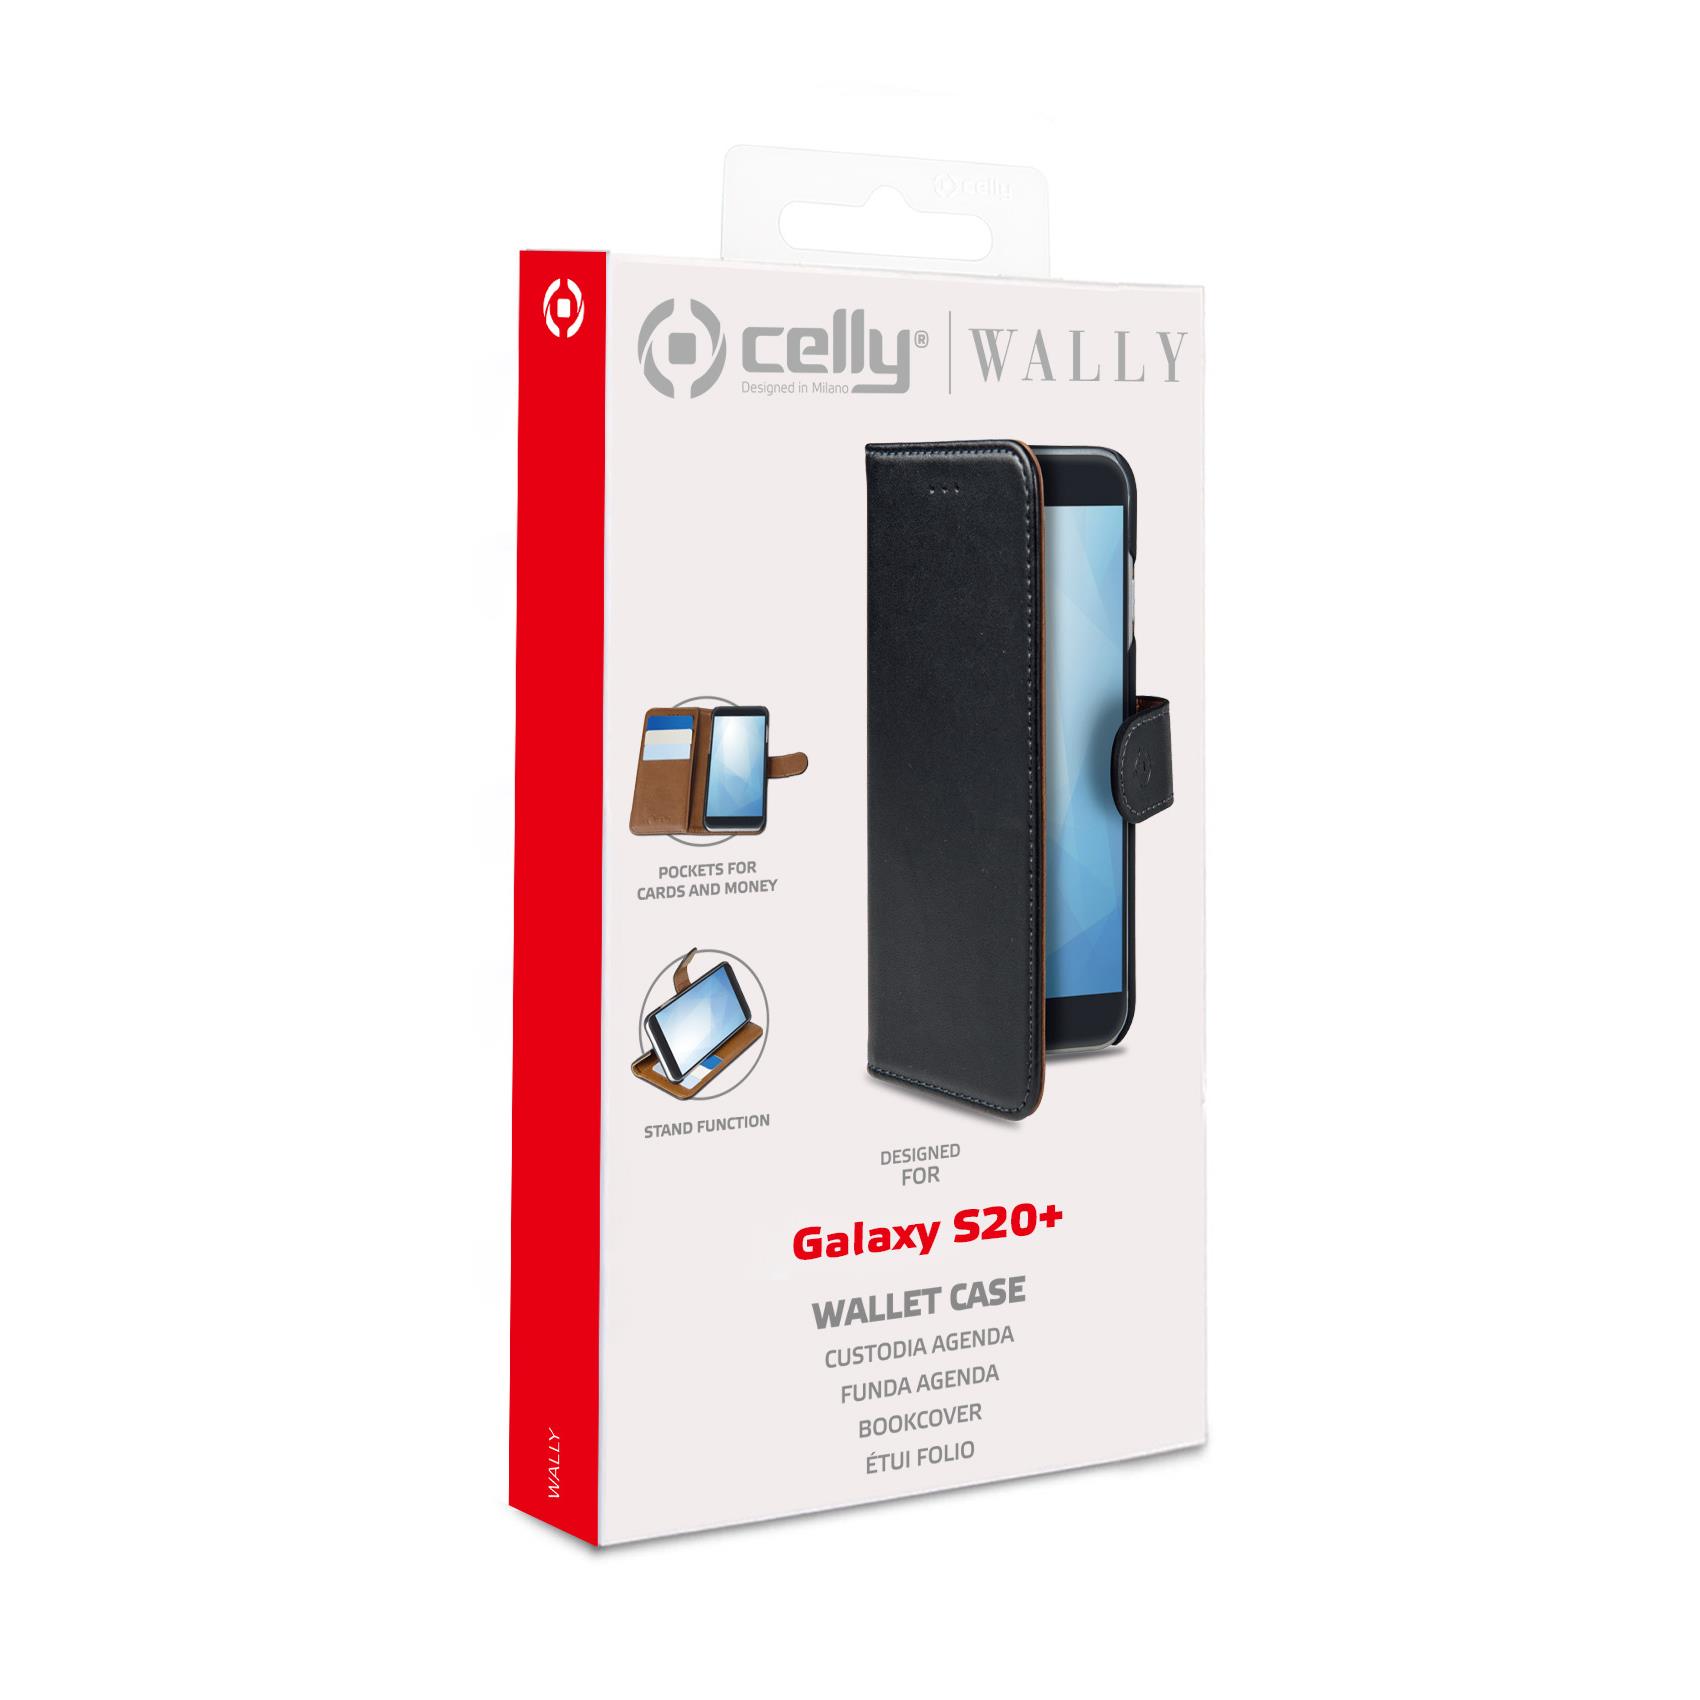 Wally Case Galaxy S20 Black Celly Wally990 8021735756491